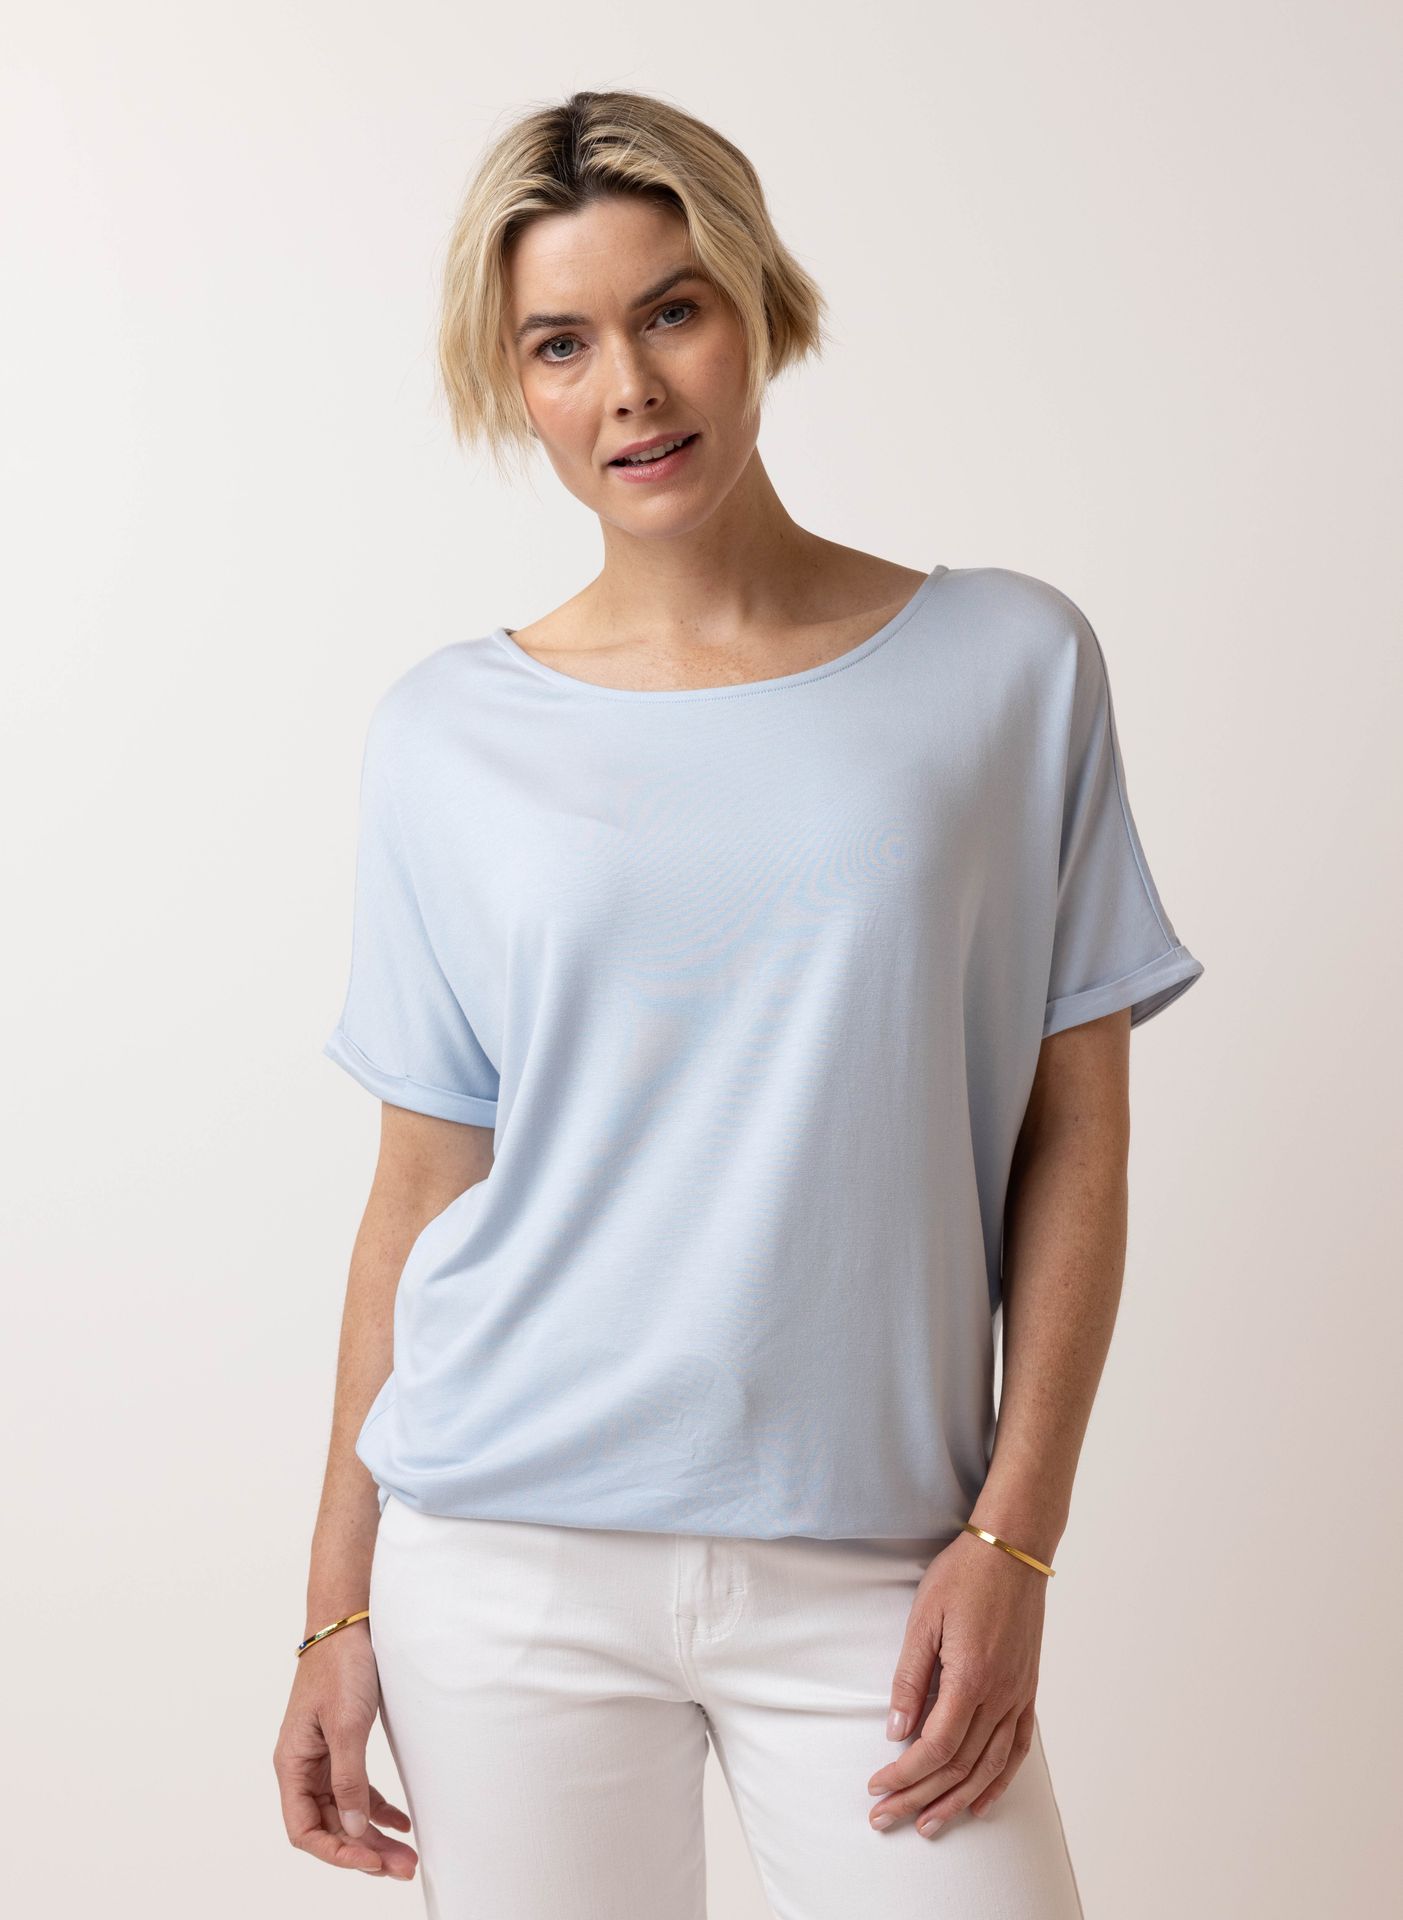 Norah Shirt pastelblauw pastel blue 215230-403